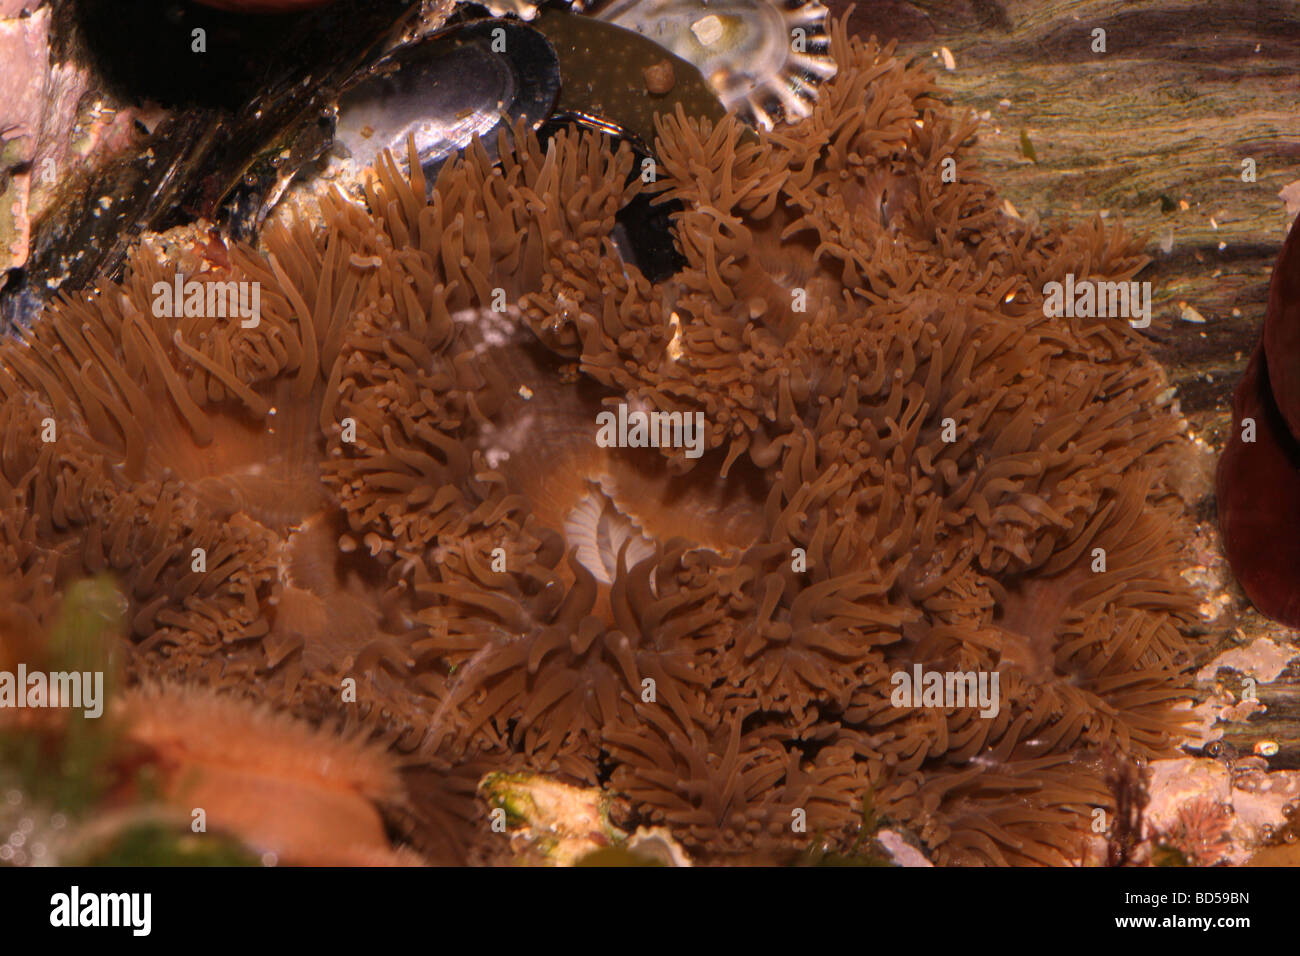 Daisy anemone Cereus pedunculatus Sagartiidae brown form in a rockpool UK Stock Photo